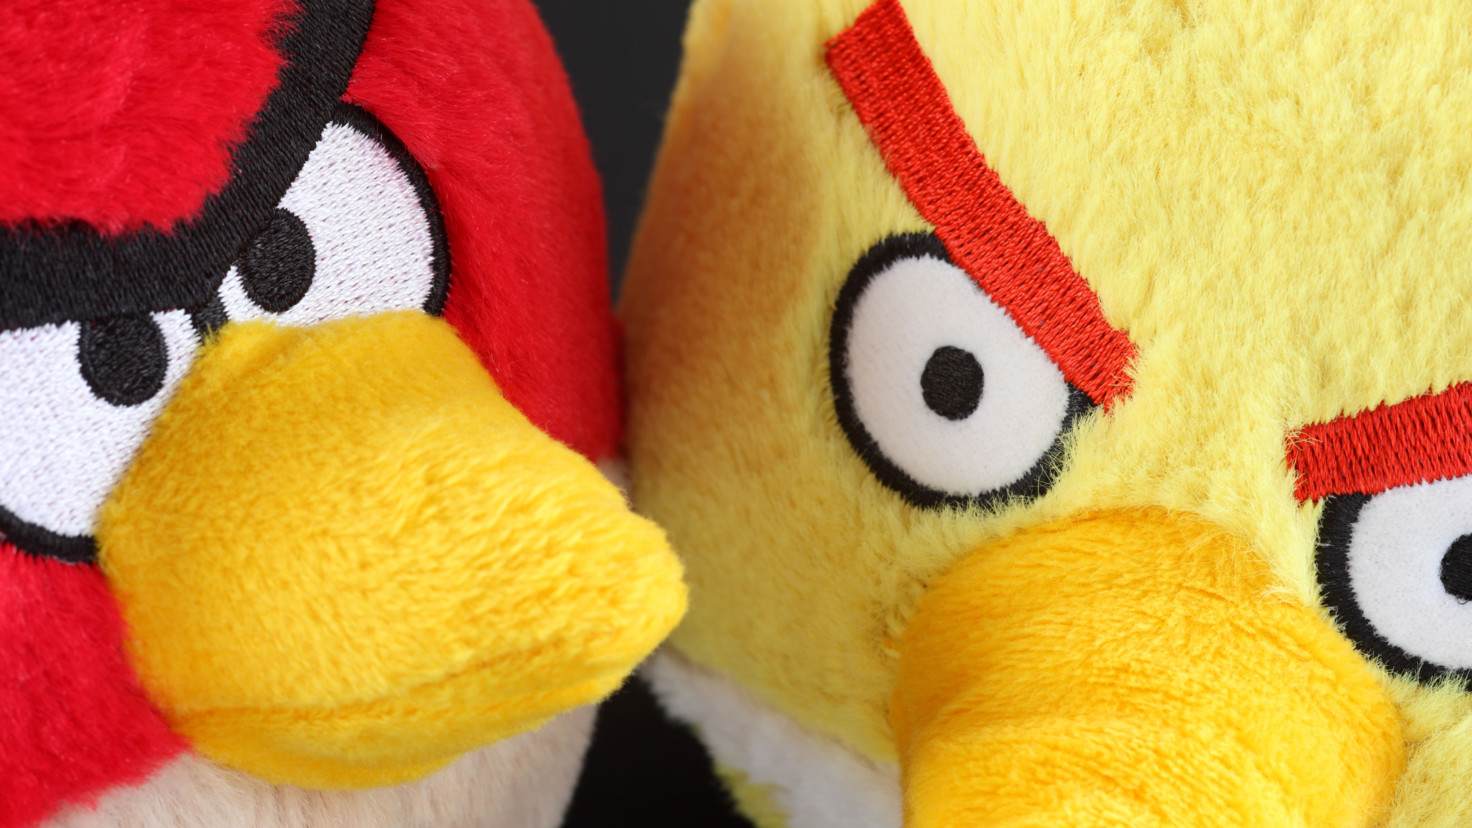 Angry Birds maker Rovio Entertainment reports profits fall